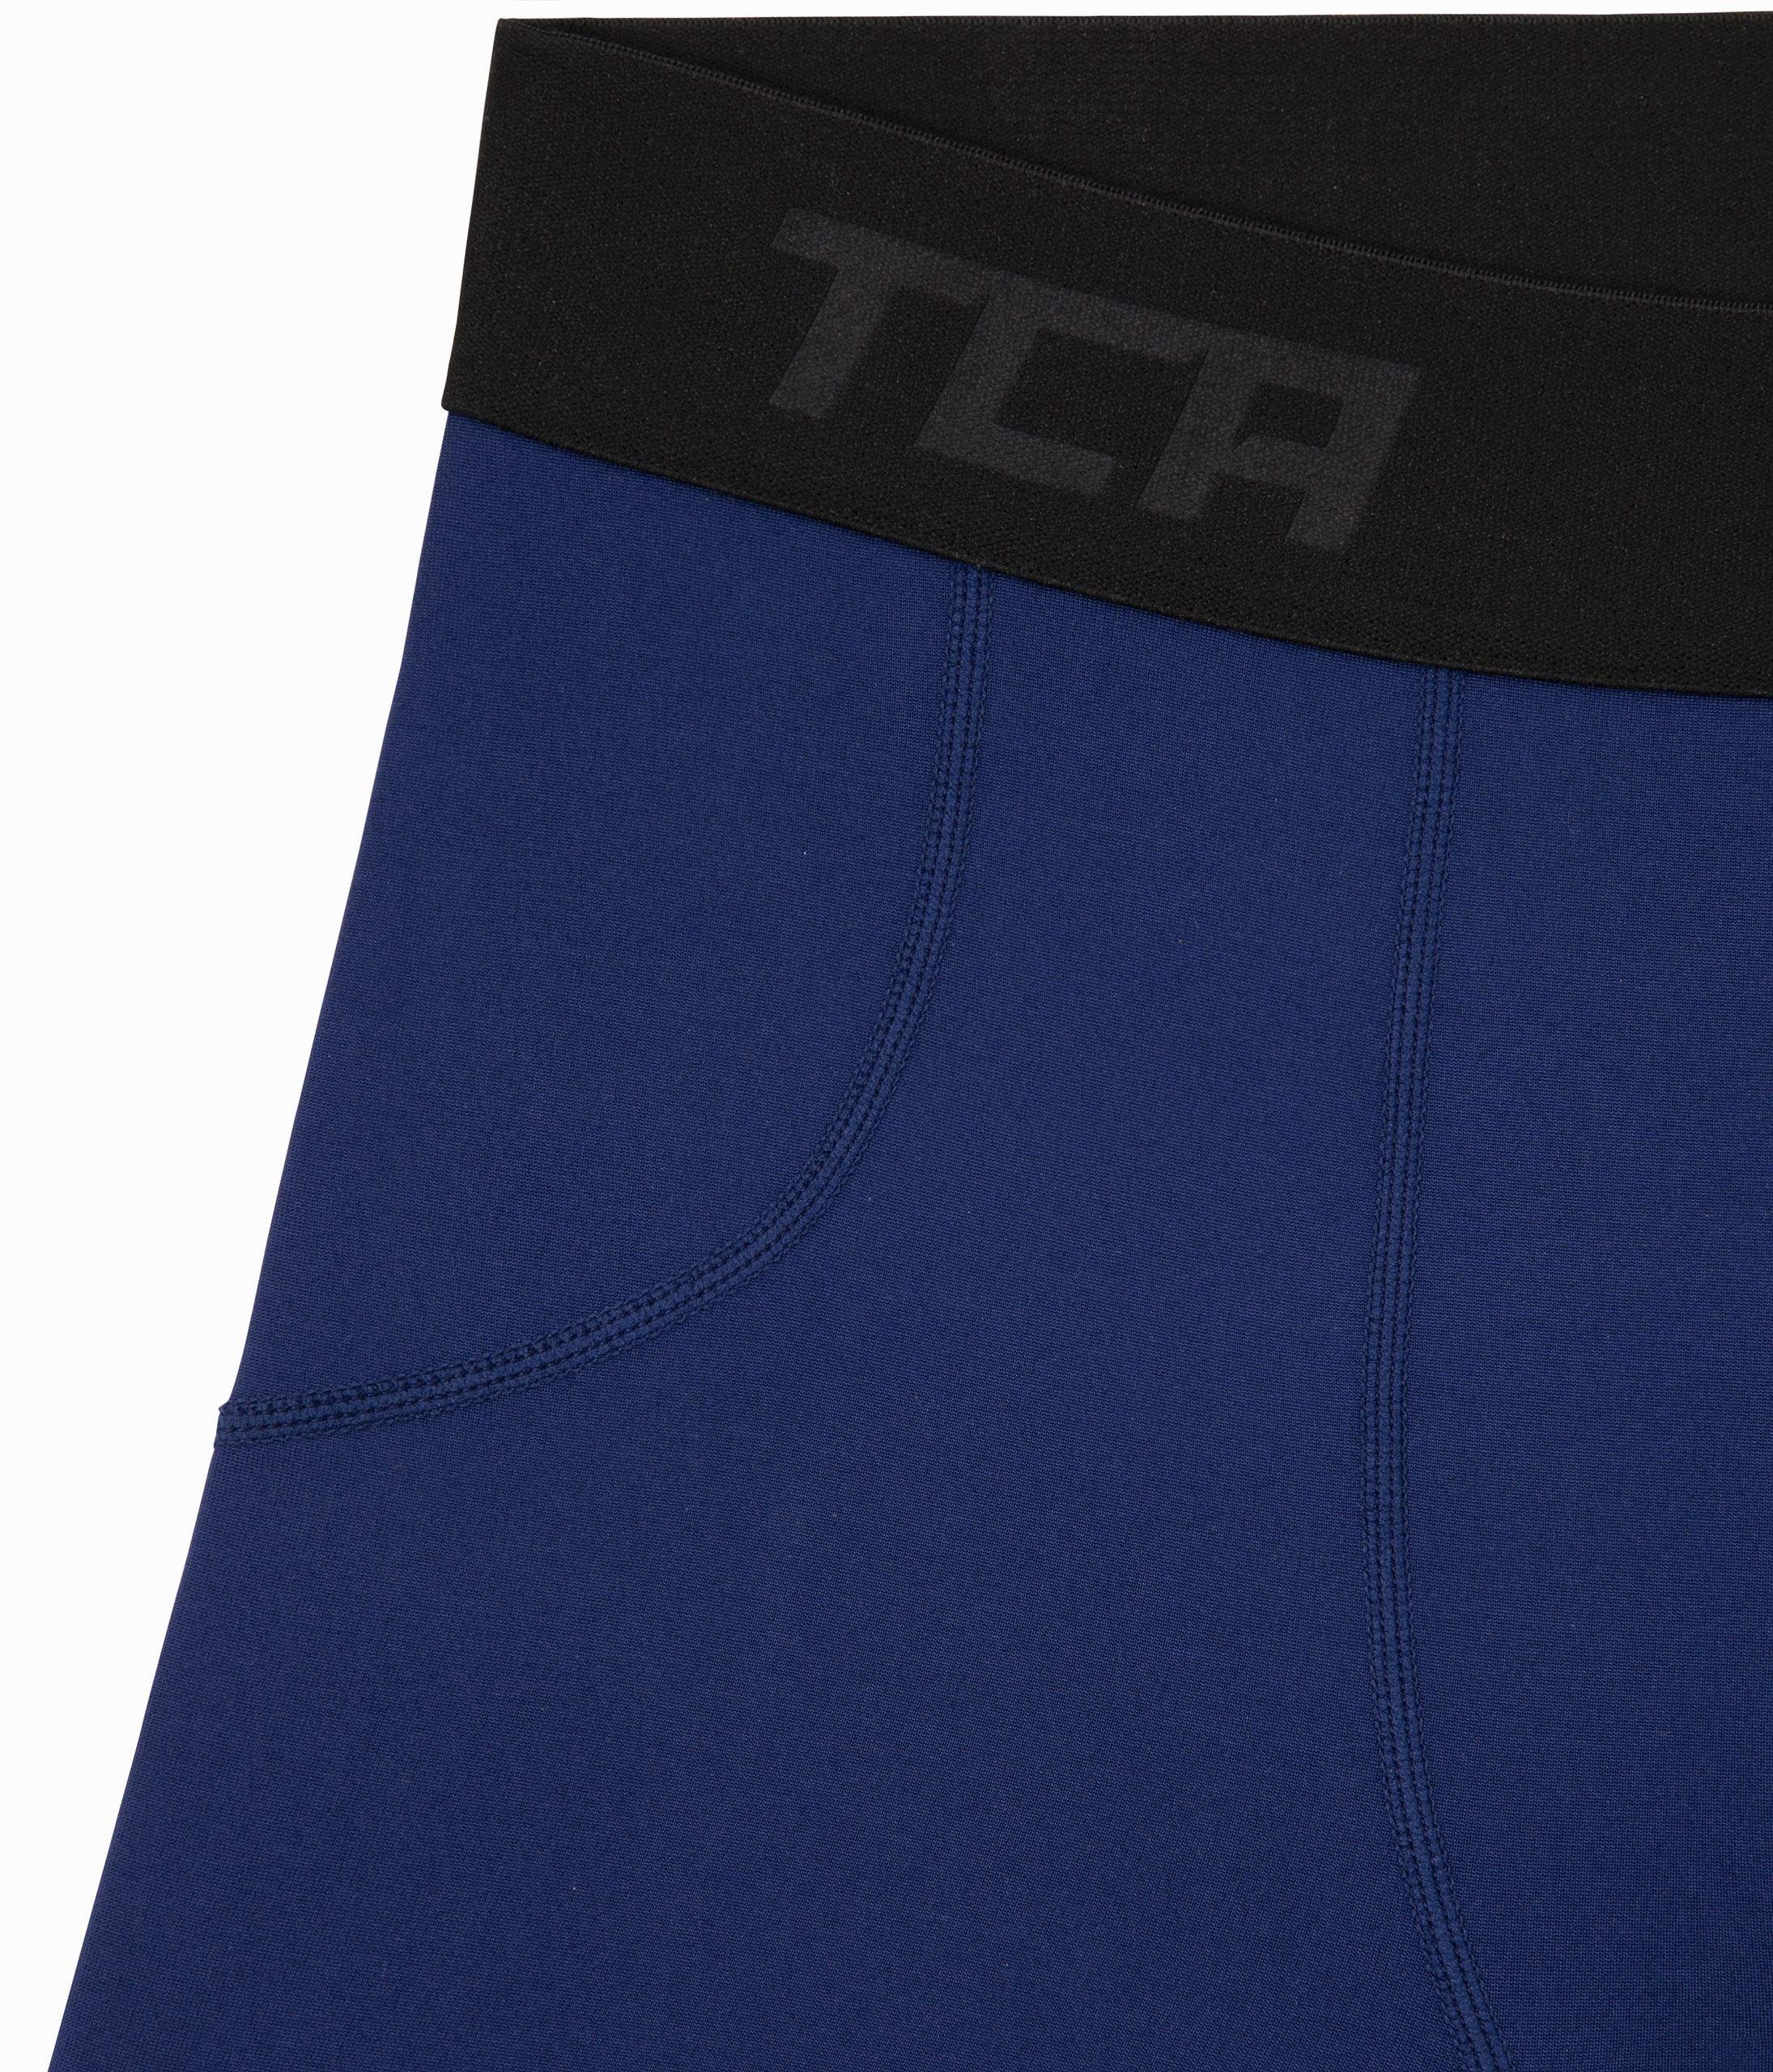 Jungen - SuperThermal TCA Blau/Schwarz Kompressions TCA Shorts Unterziehshirt